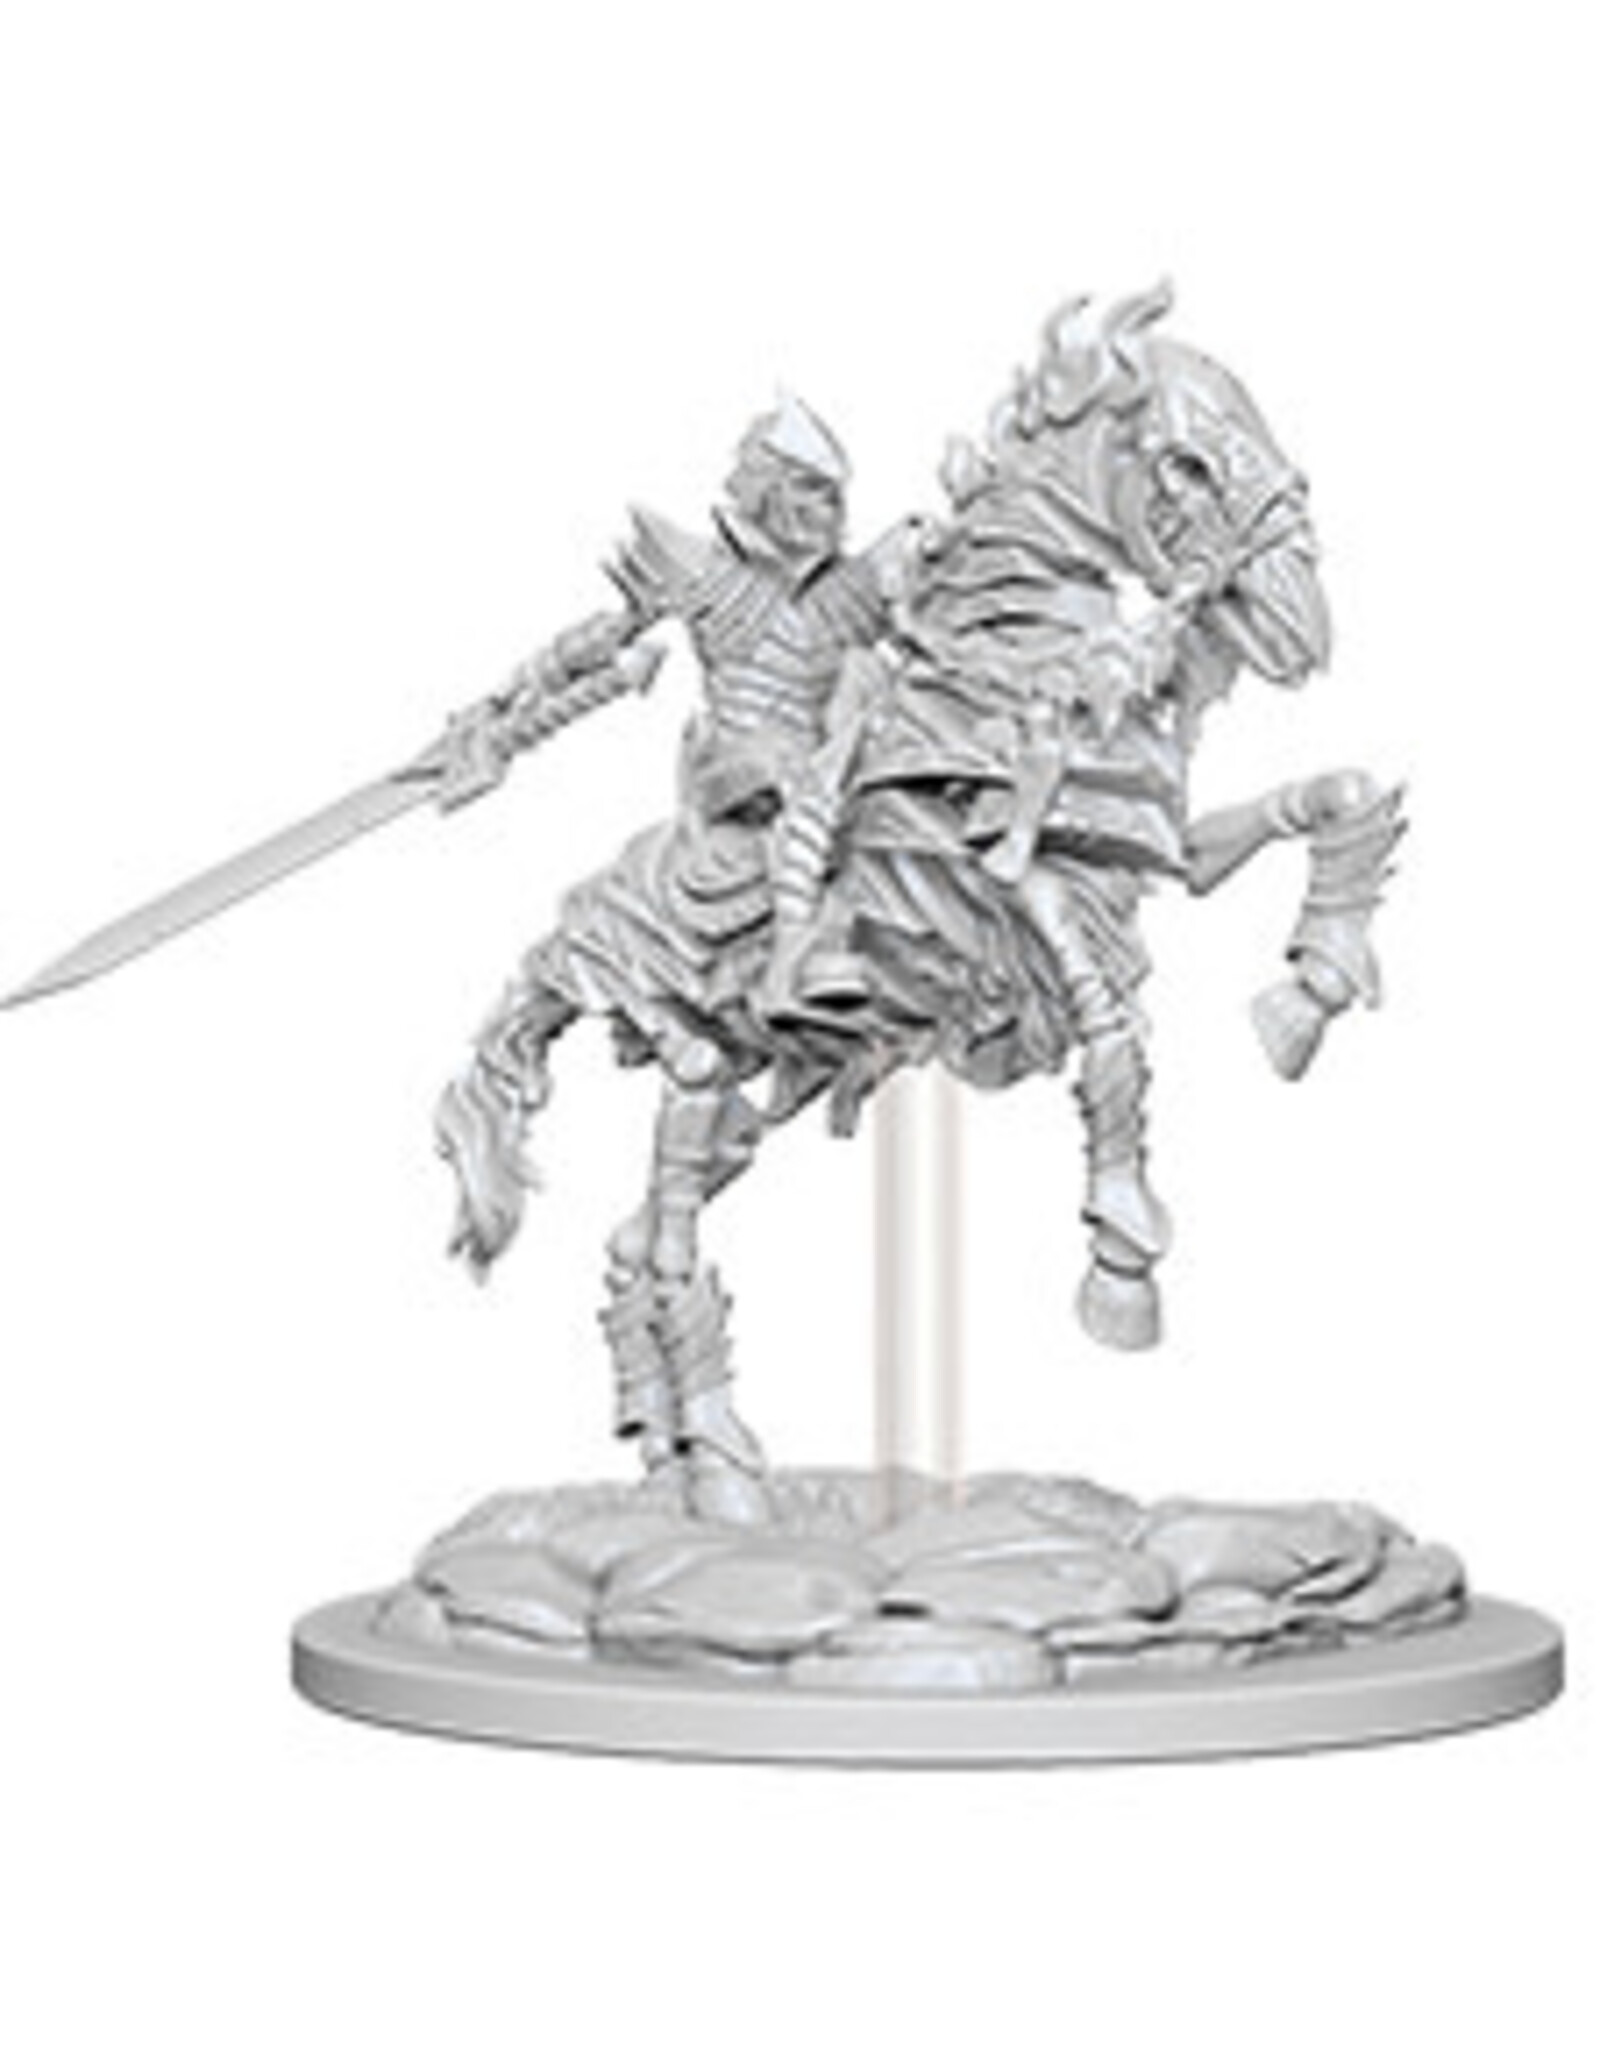 Wiz-Kids Pathfinder Minis: W5 Skeleton Knight on Horse